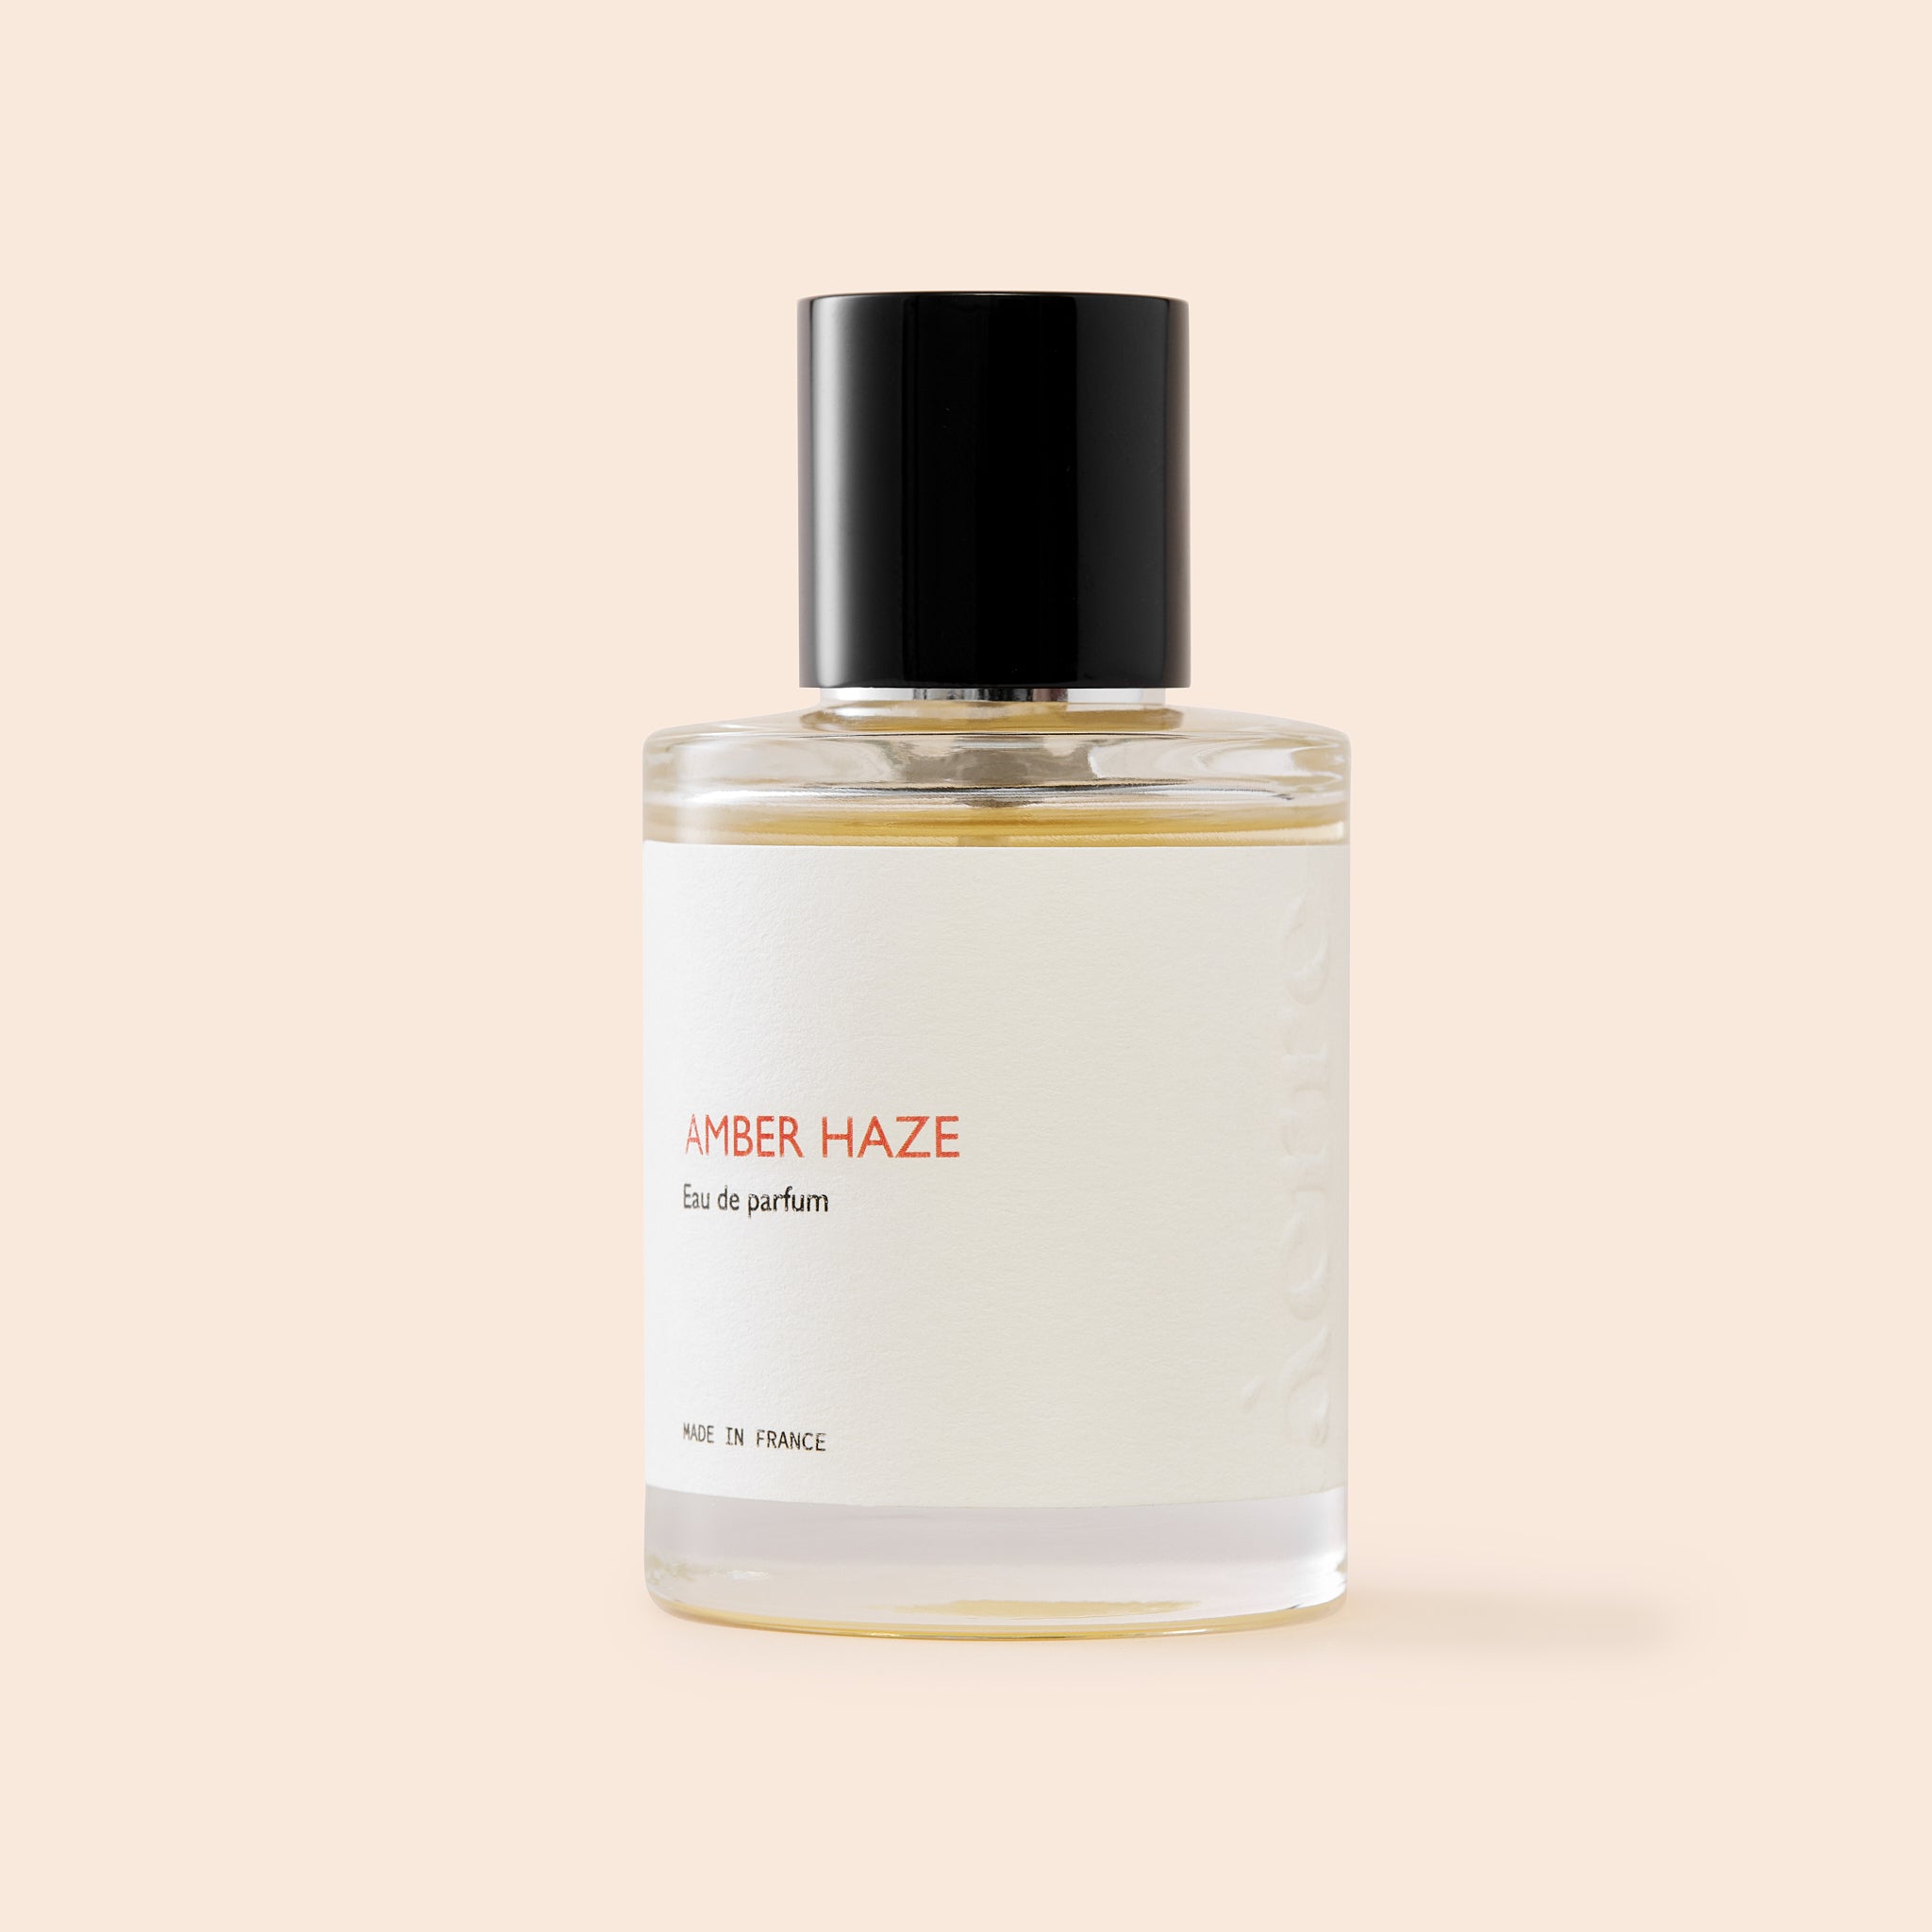 Tom Ford's Tobacco Vanille Perfume Impression - Amber Haze